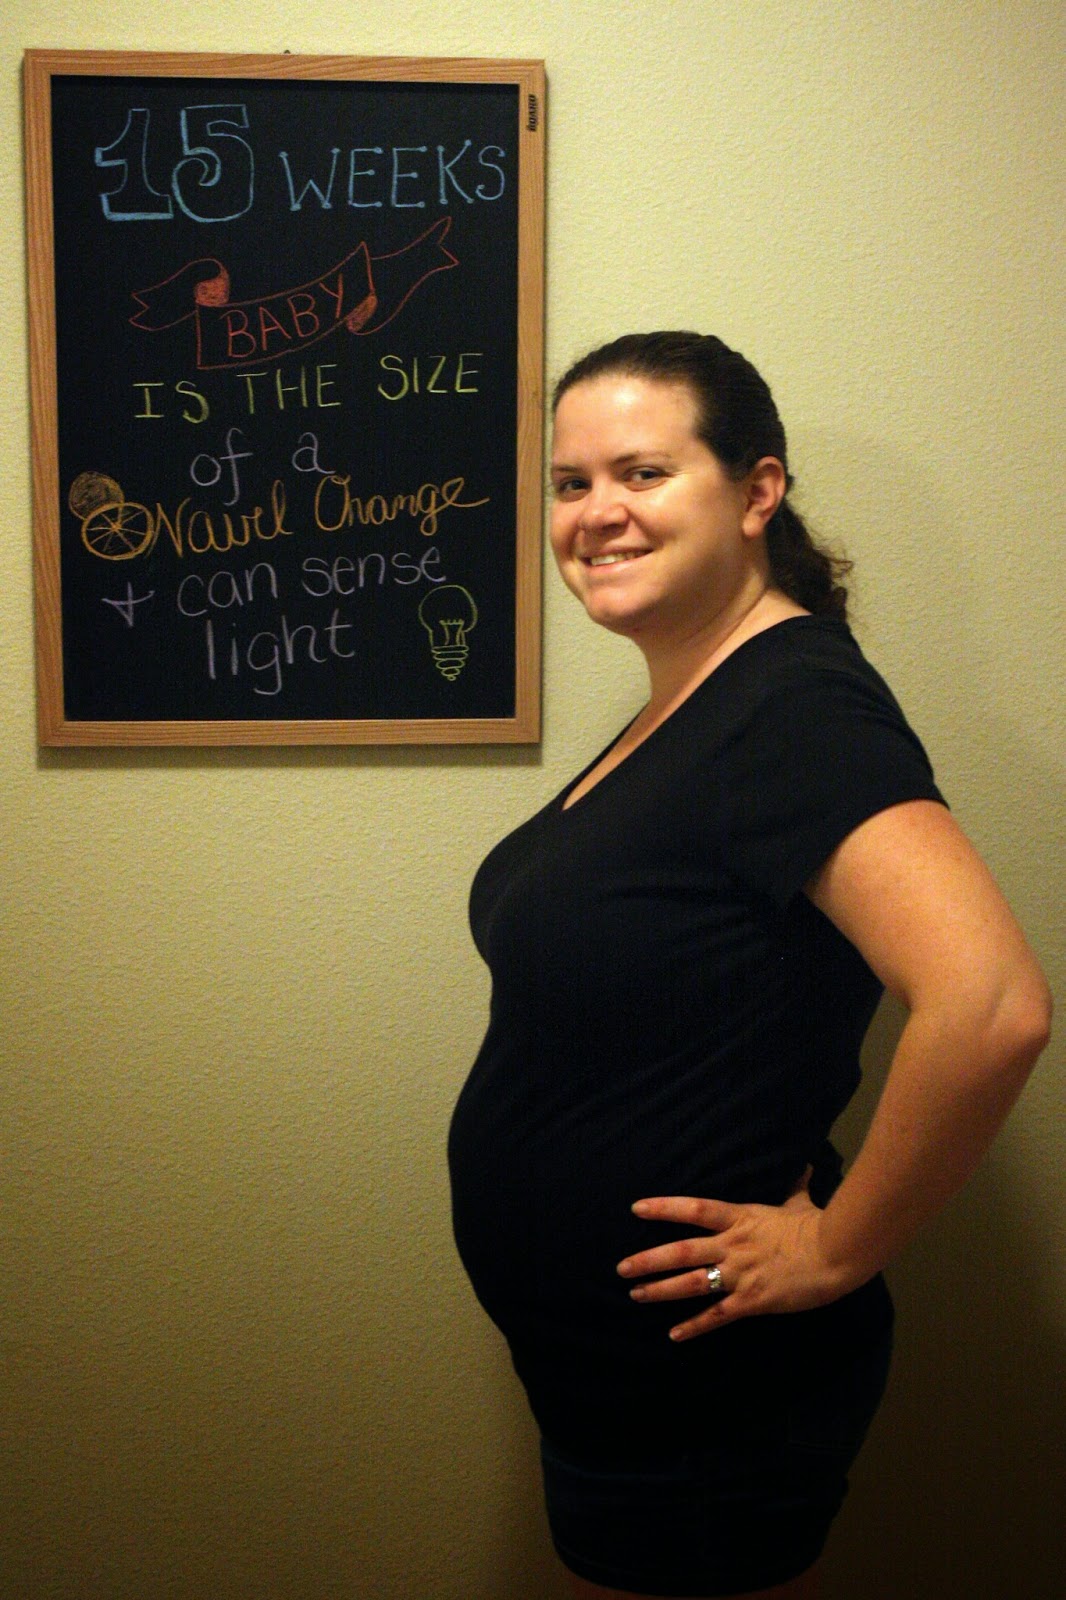 15 Weeks Pregnant Our Little Florida Orange